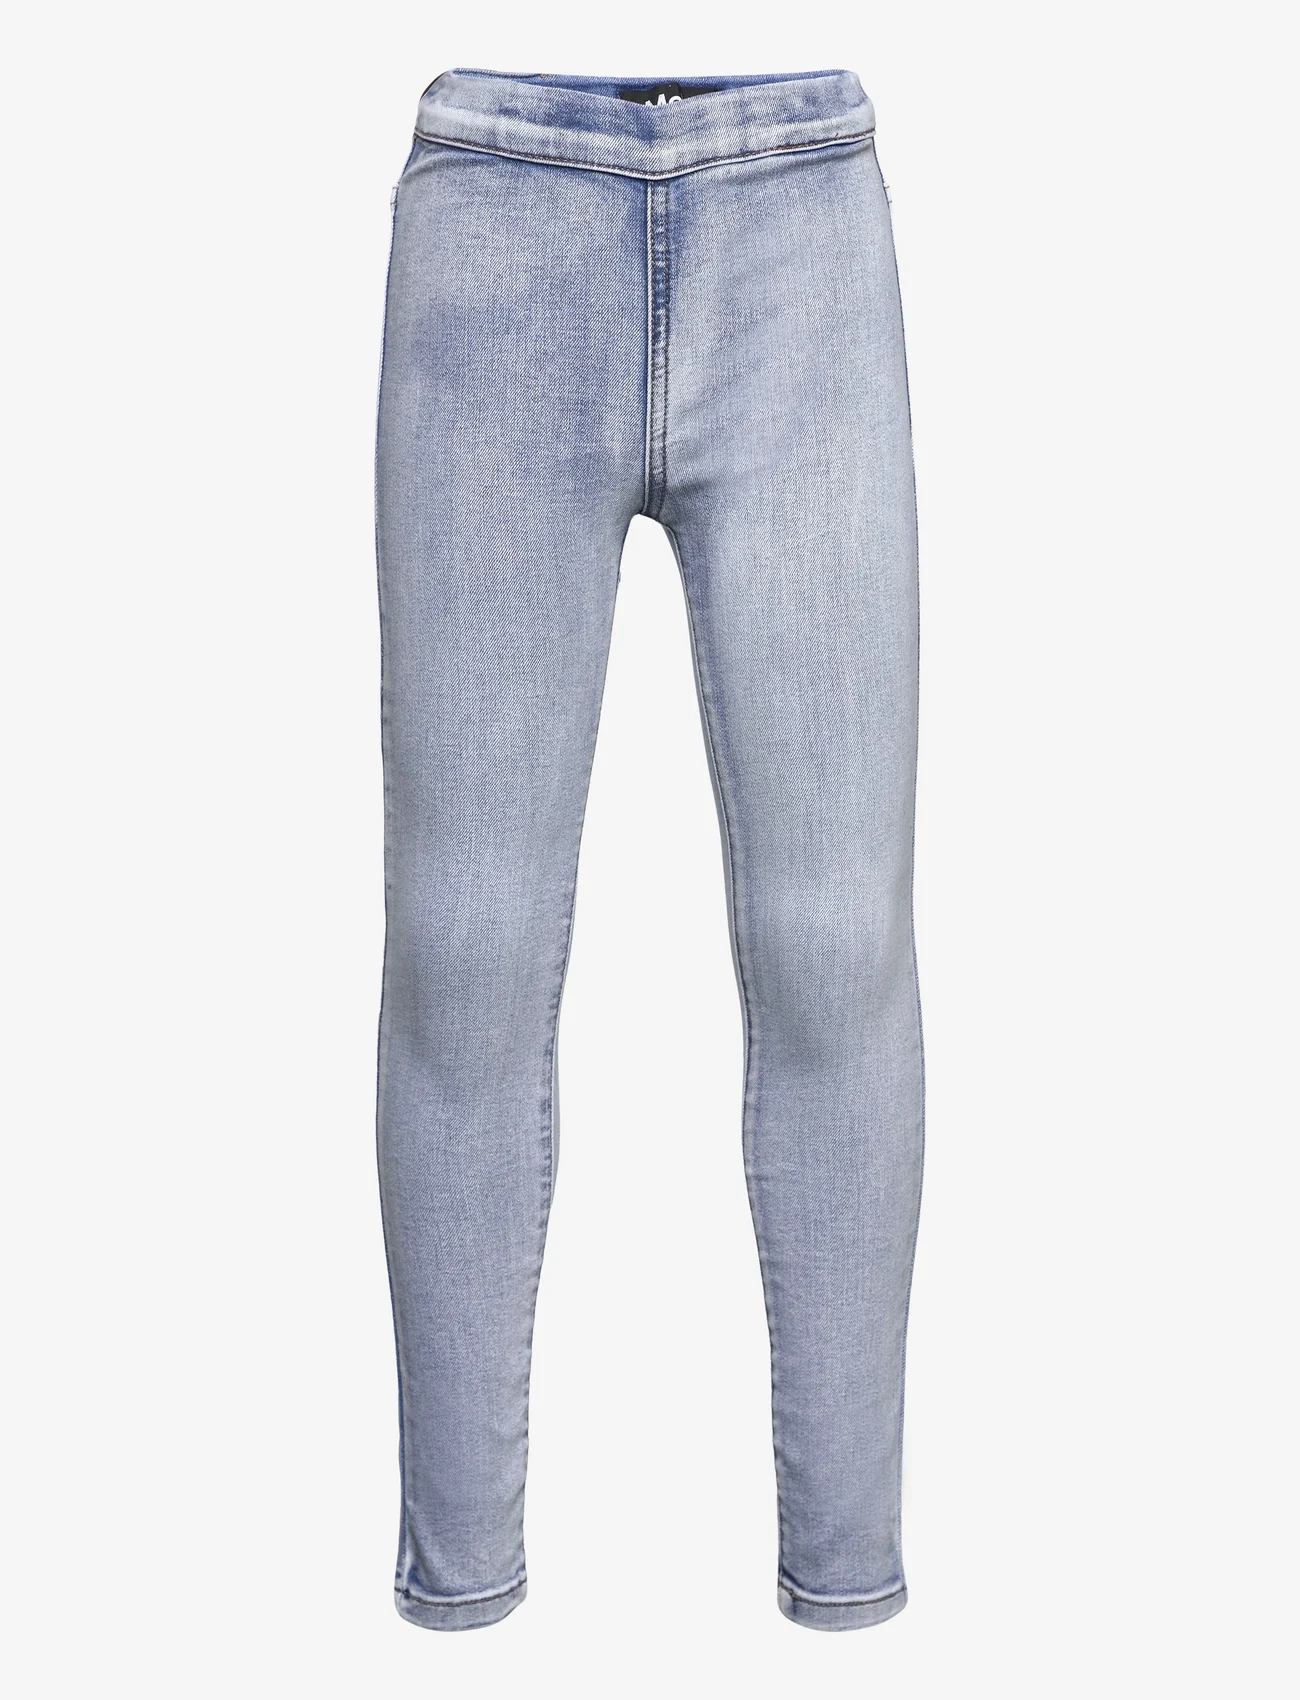 Molo - April - skinny jeans - light washed blue - 0